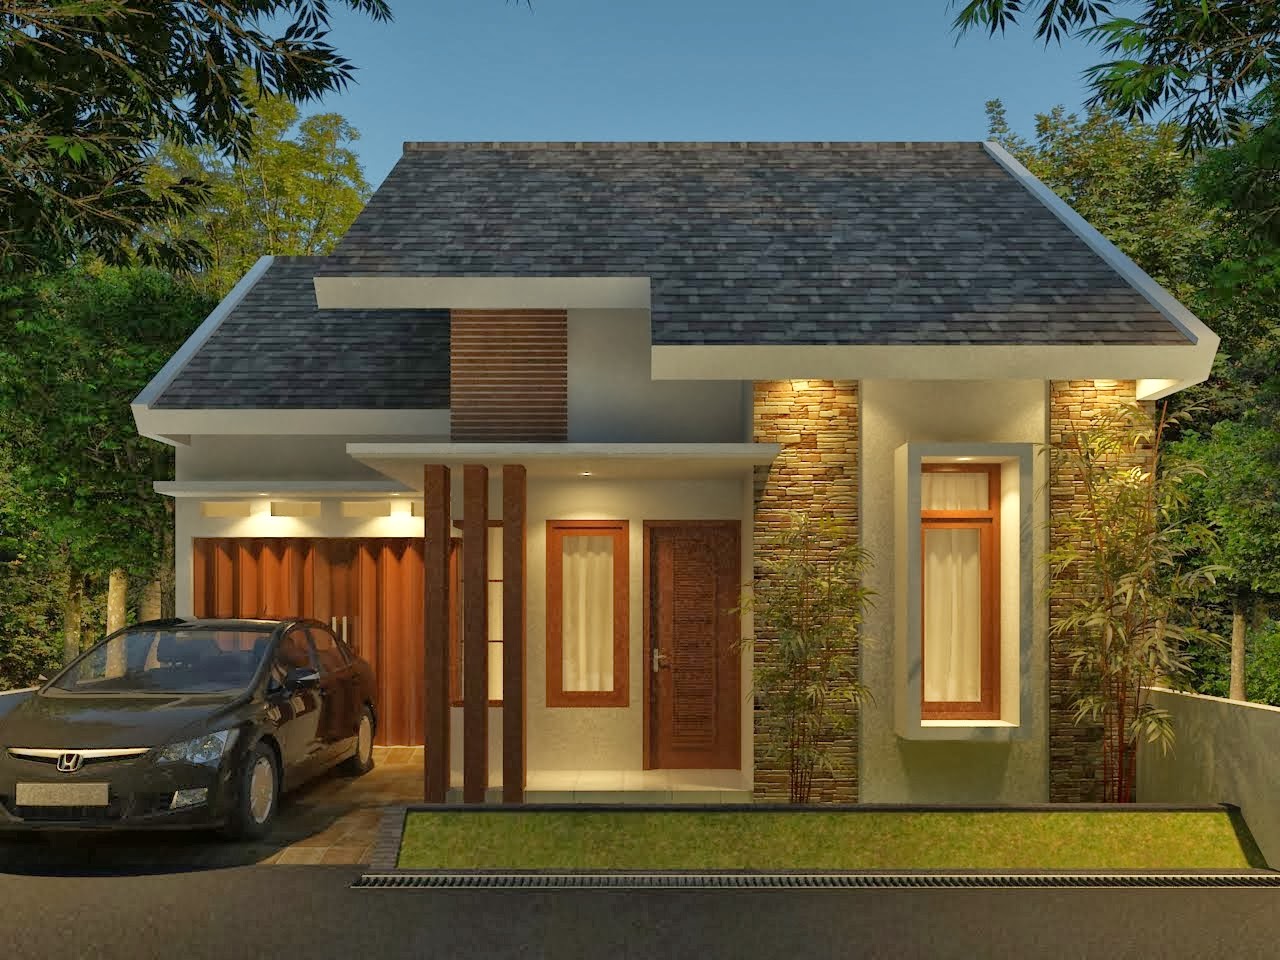  Gambar  rumah  minimalis satu lantai Unik Gaya Baru 2014 Gambar  Rumah  dan property Idaman  paling 